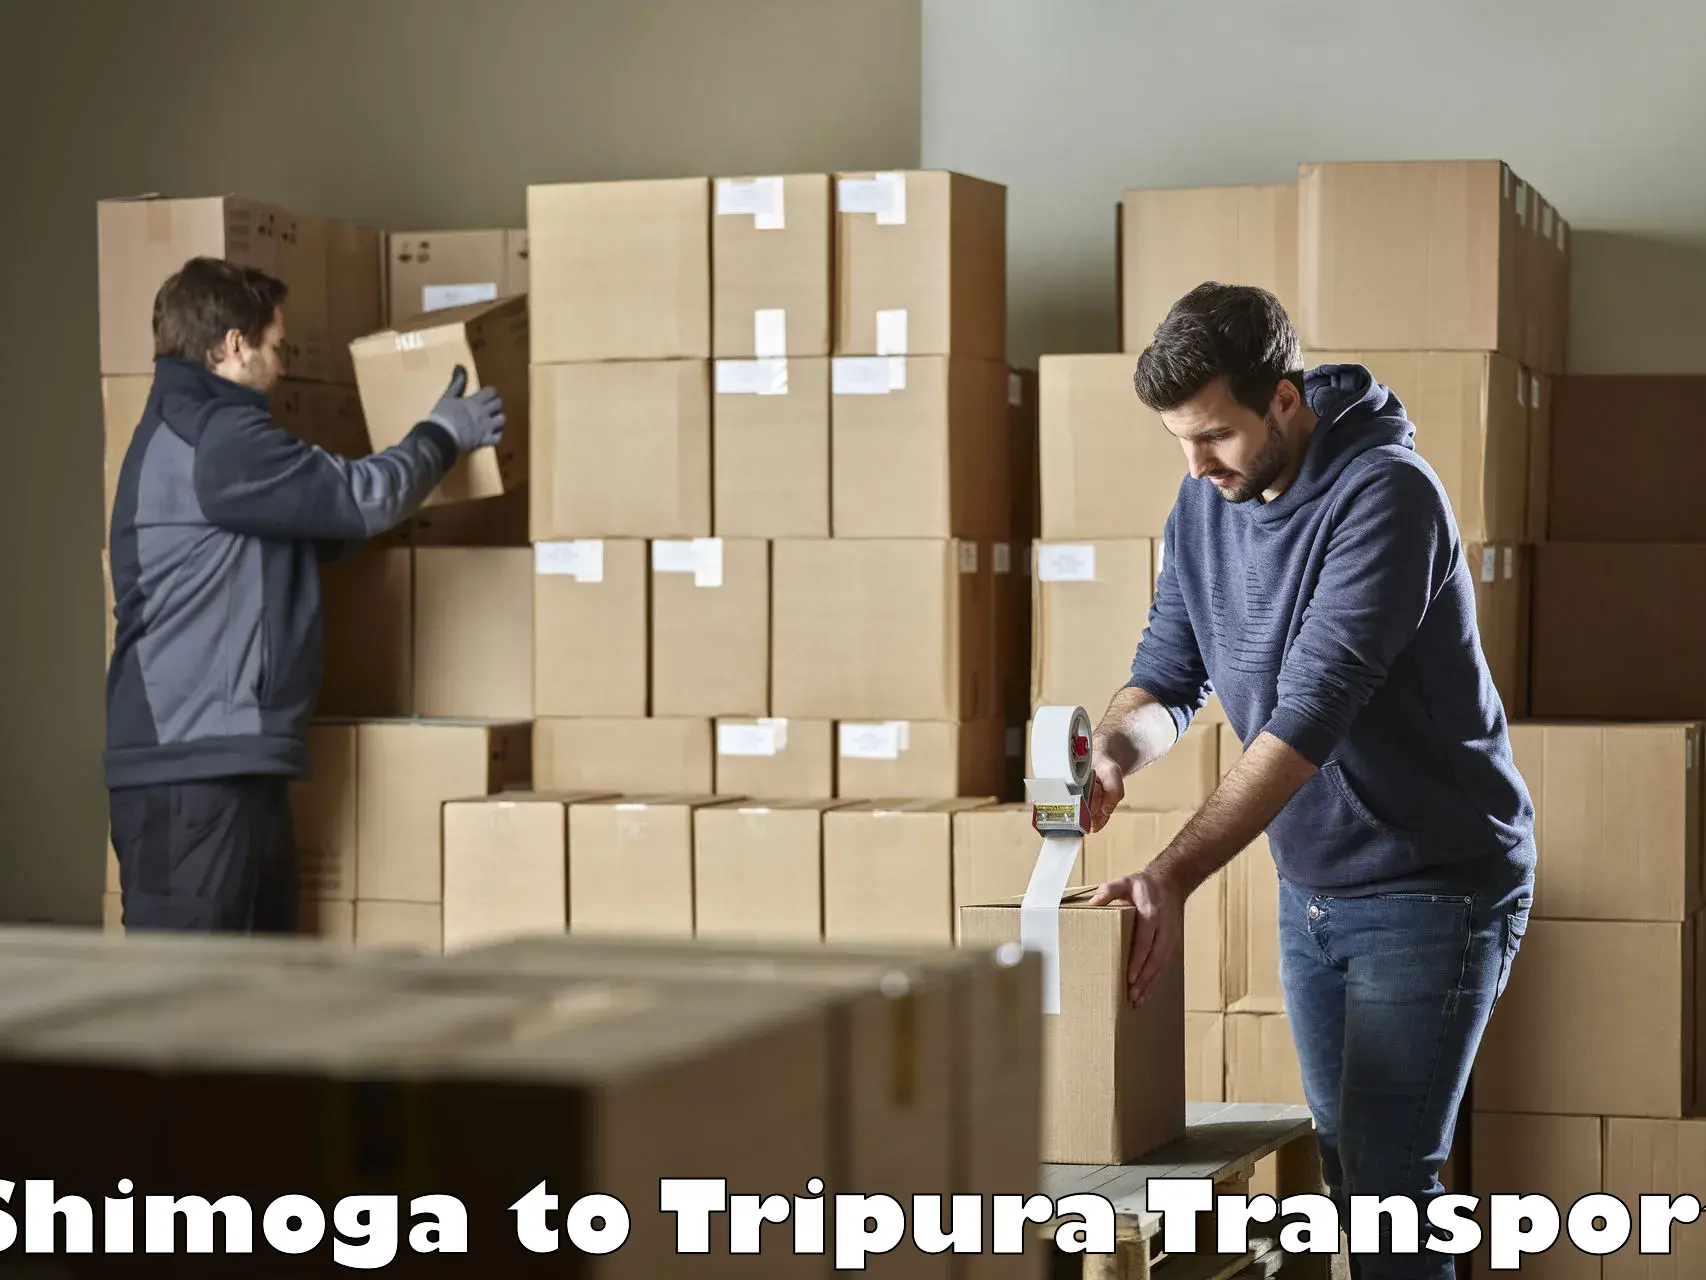 Daily transport service Shimoga to Tripura